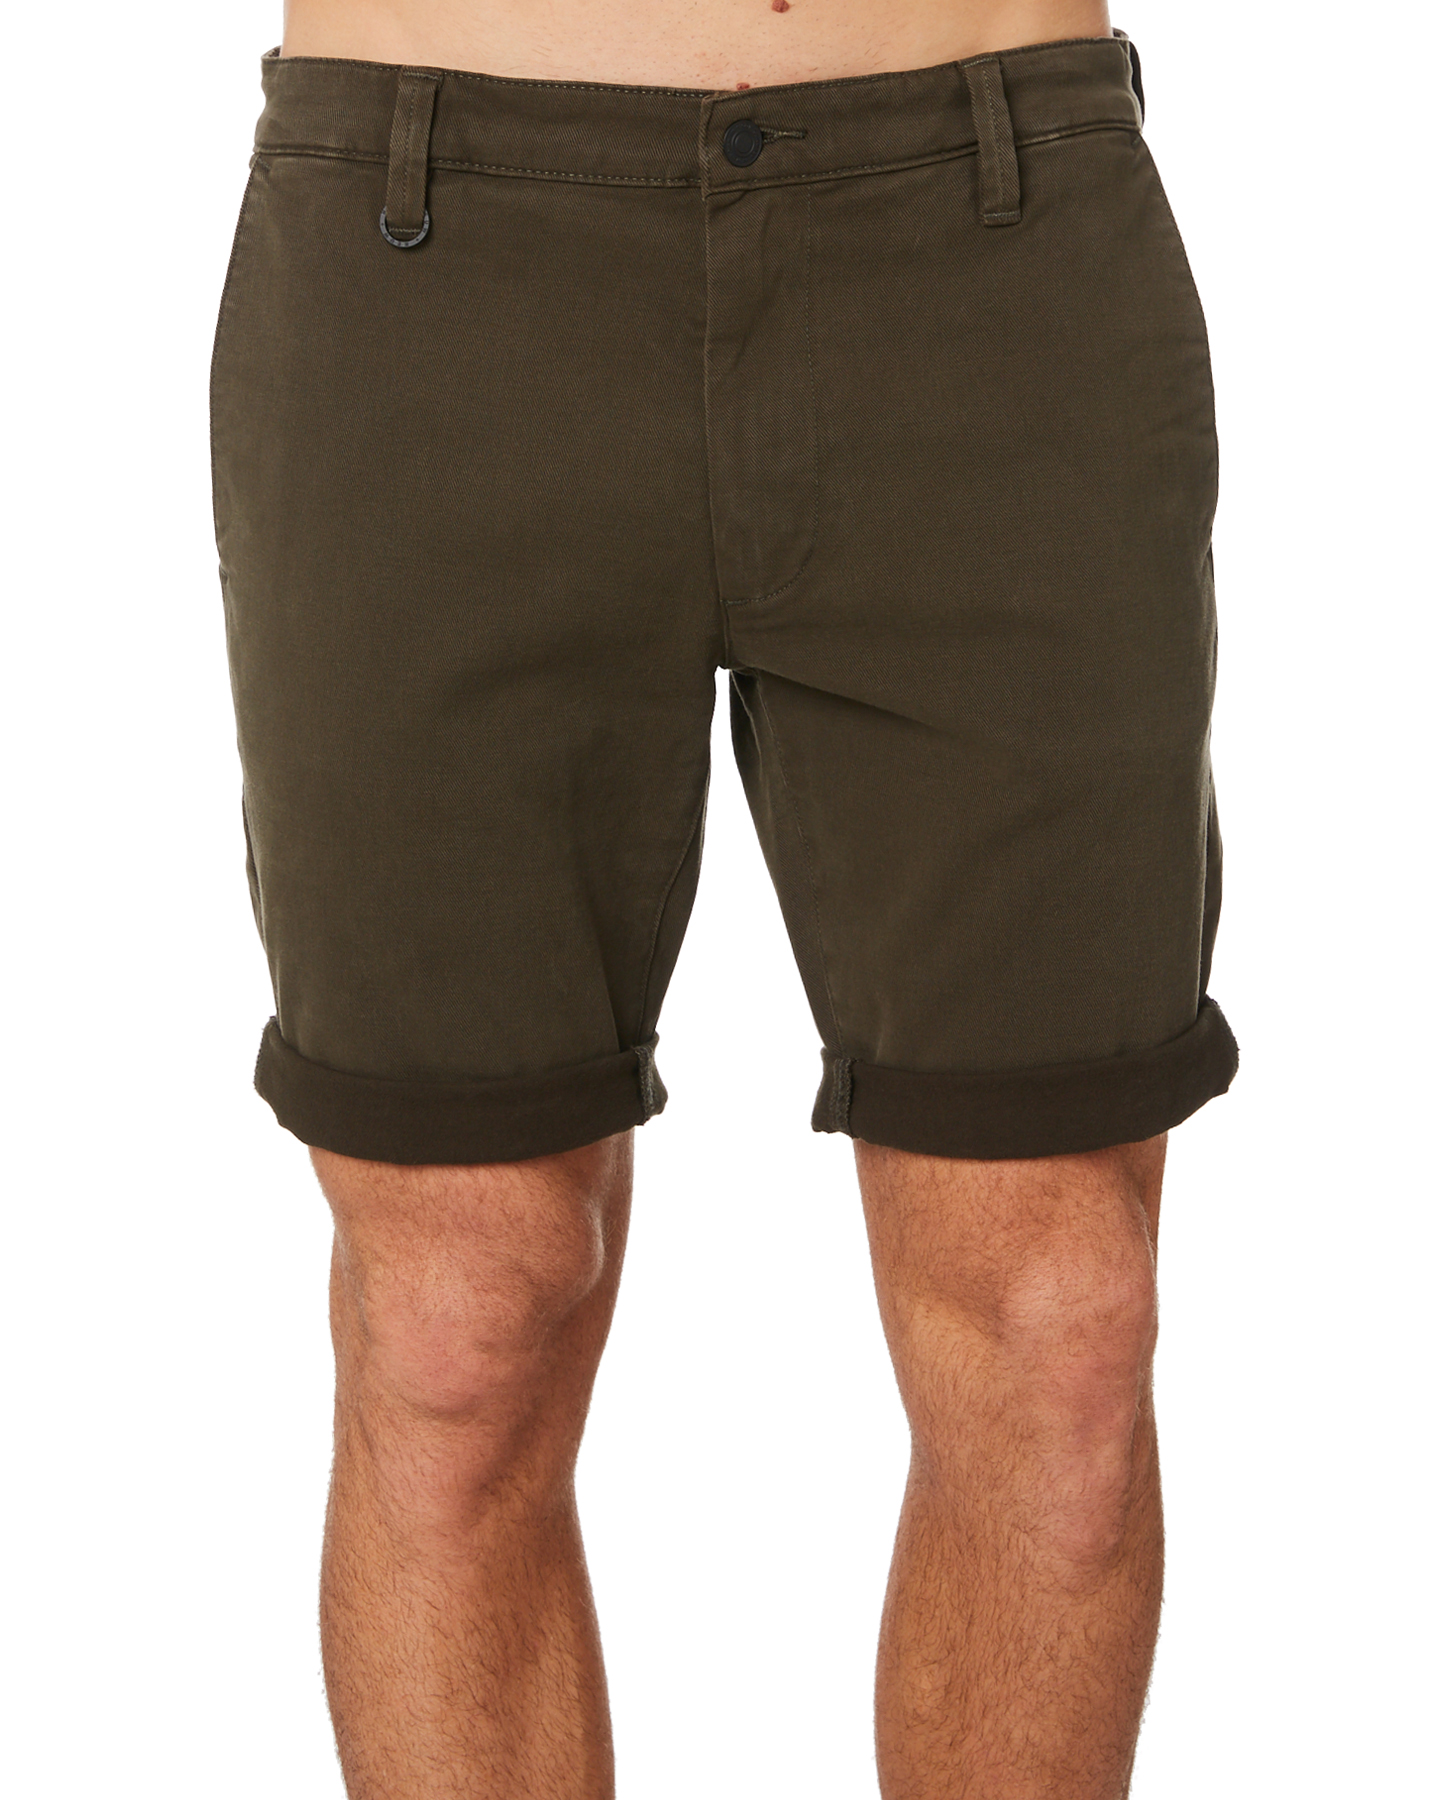 olive green shorts men